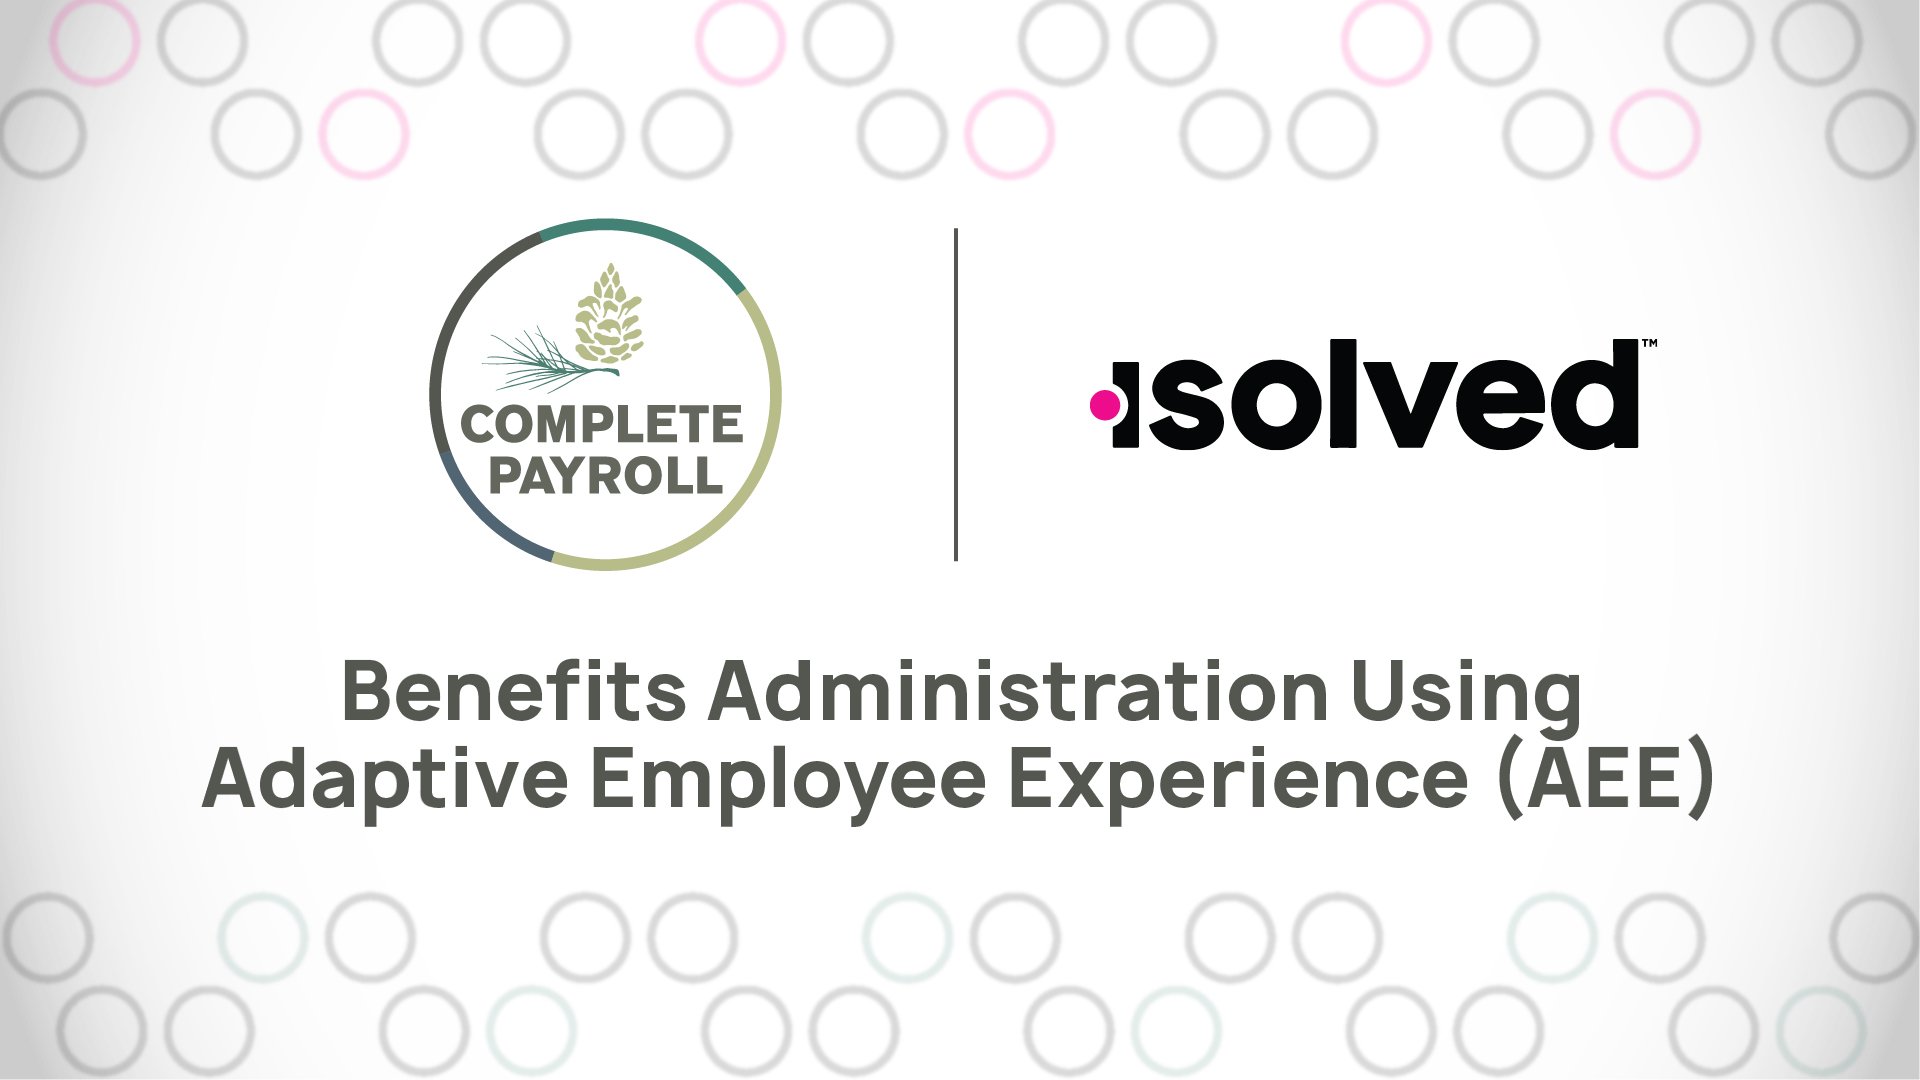 Benefits Administration Using Adaptive Employee Experience (AEE)